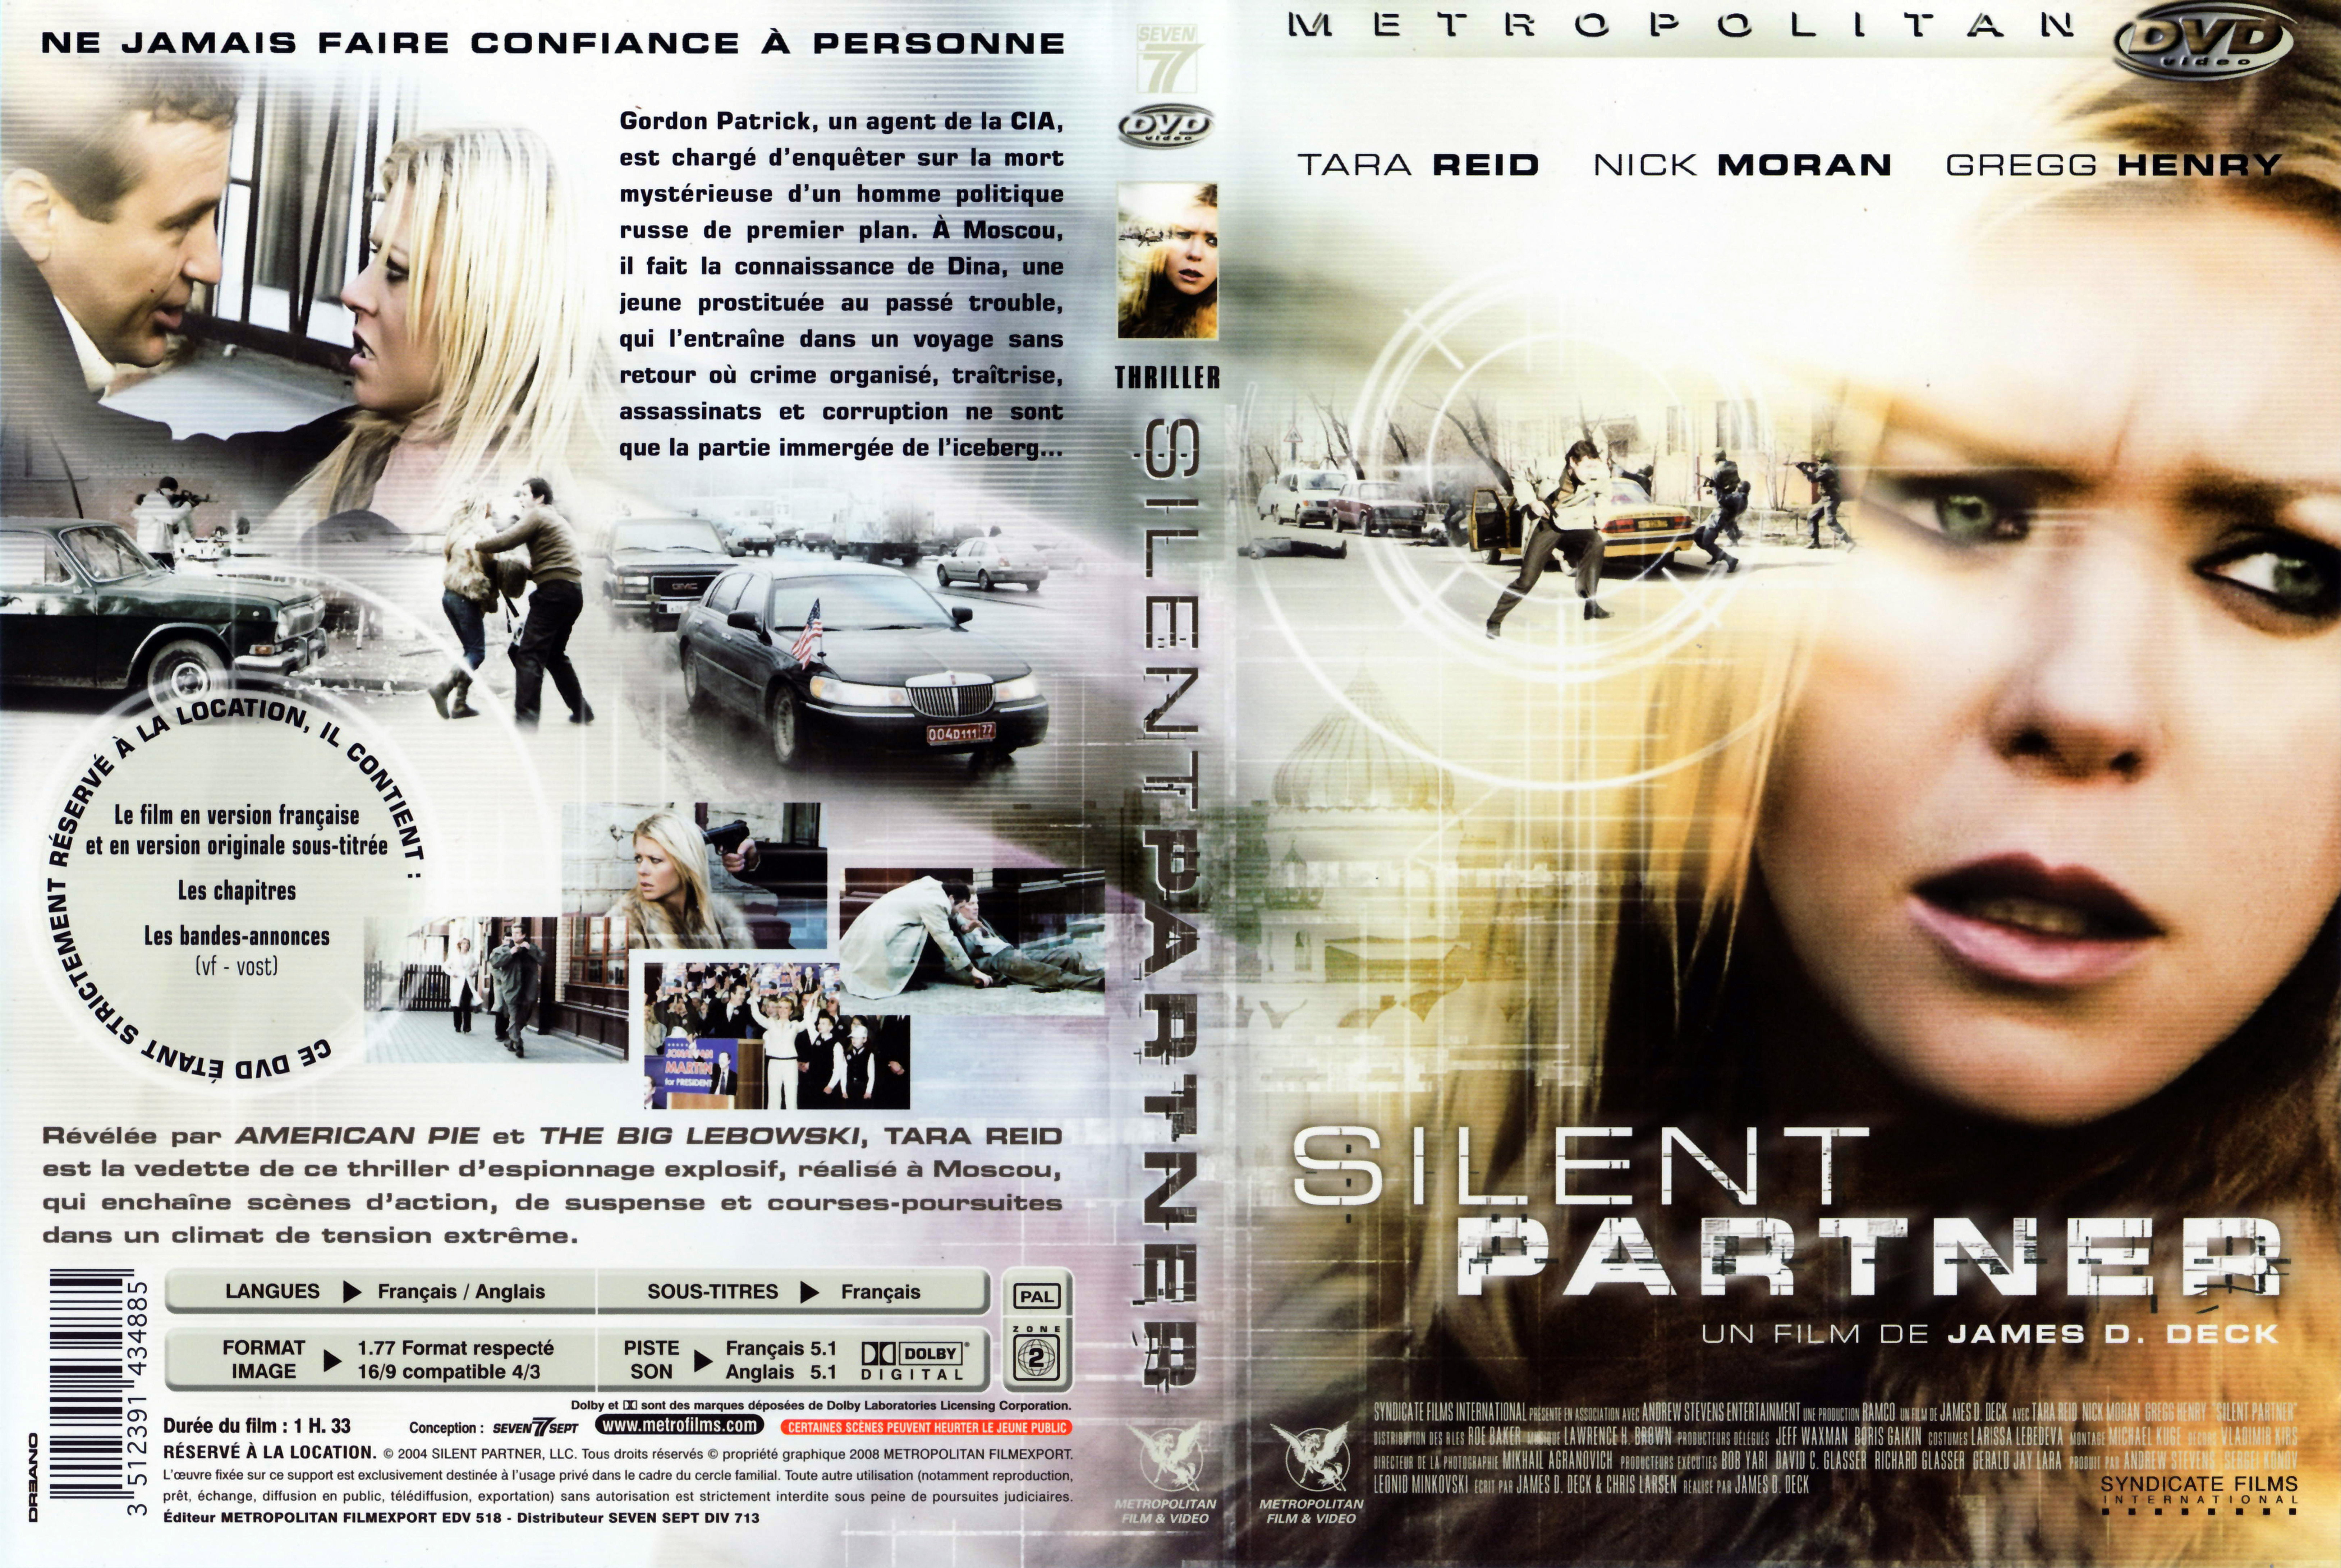 Jaquette DVD Silent partner